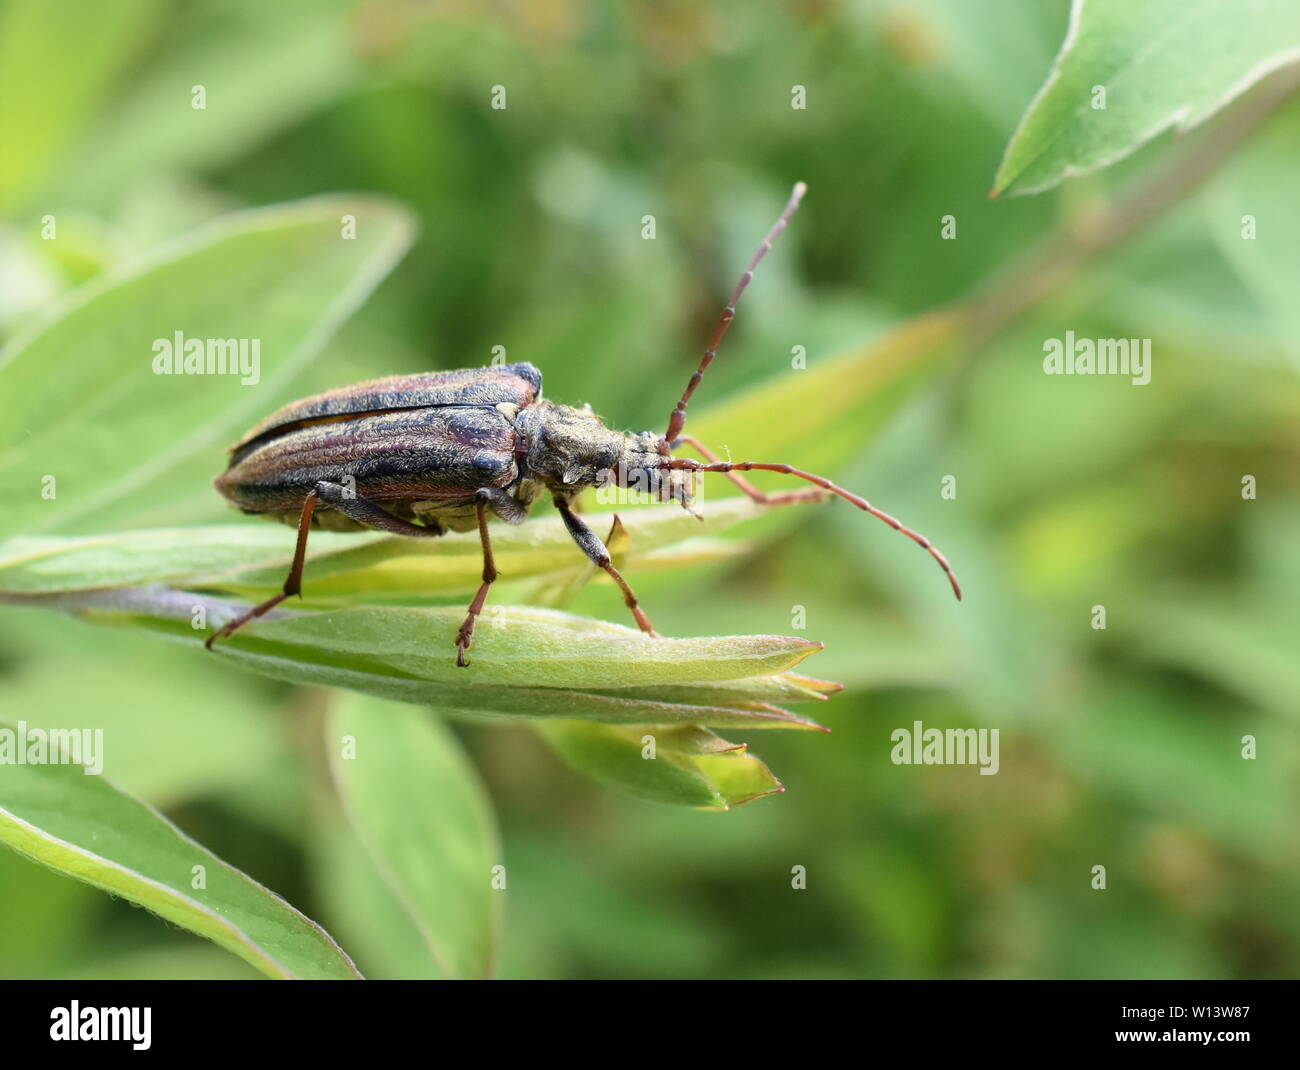 The longhorn beetle Oxymirus cursor female in vegetation Stock Photo